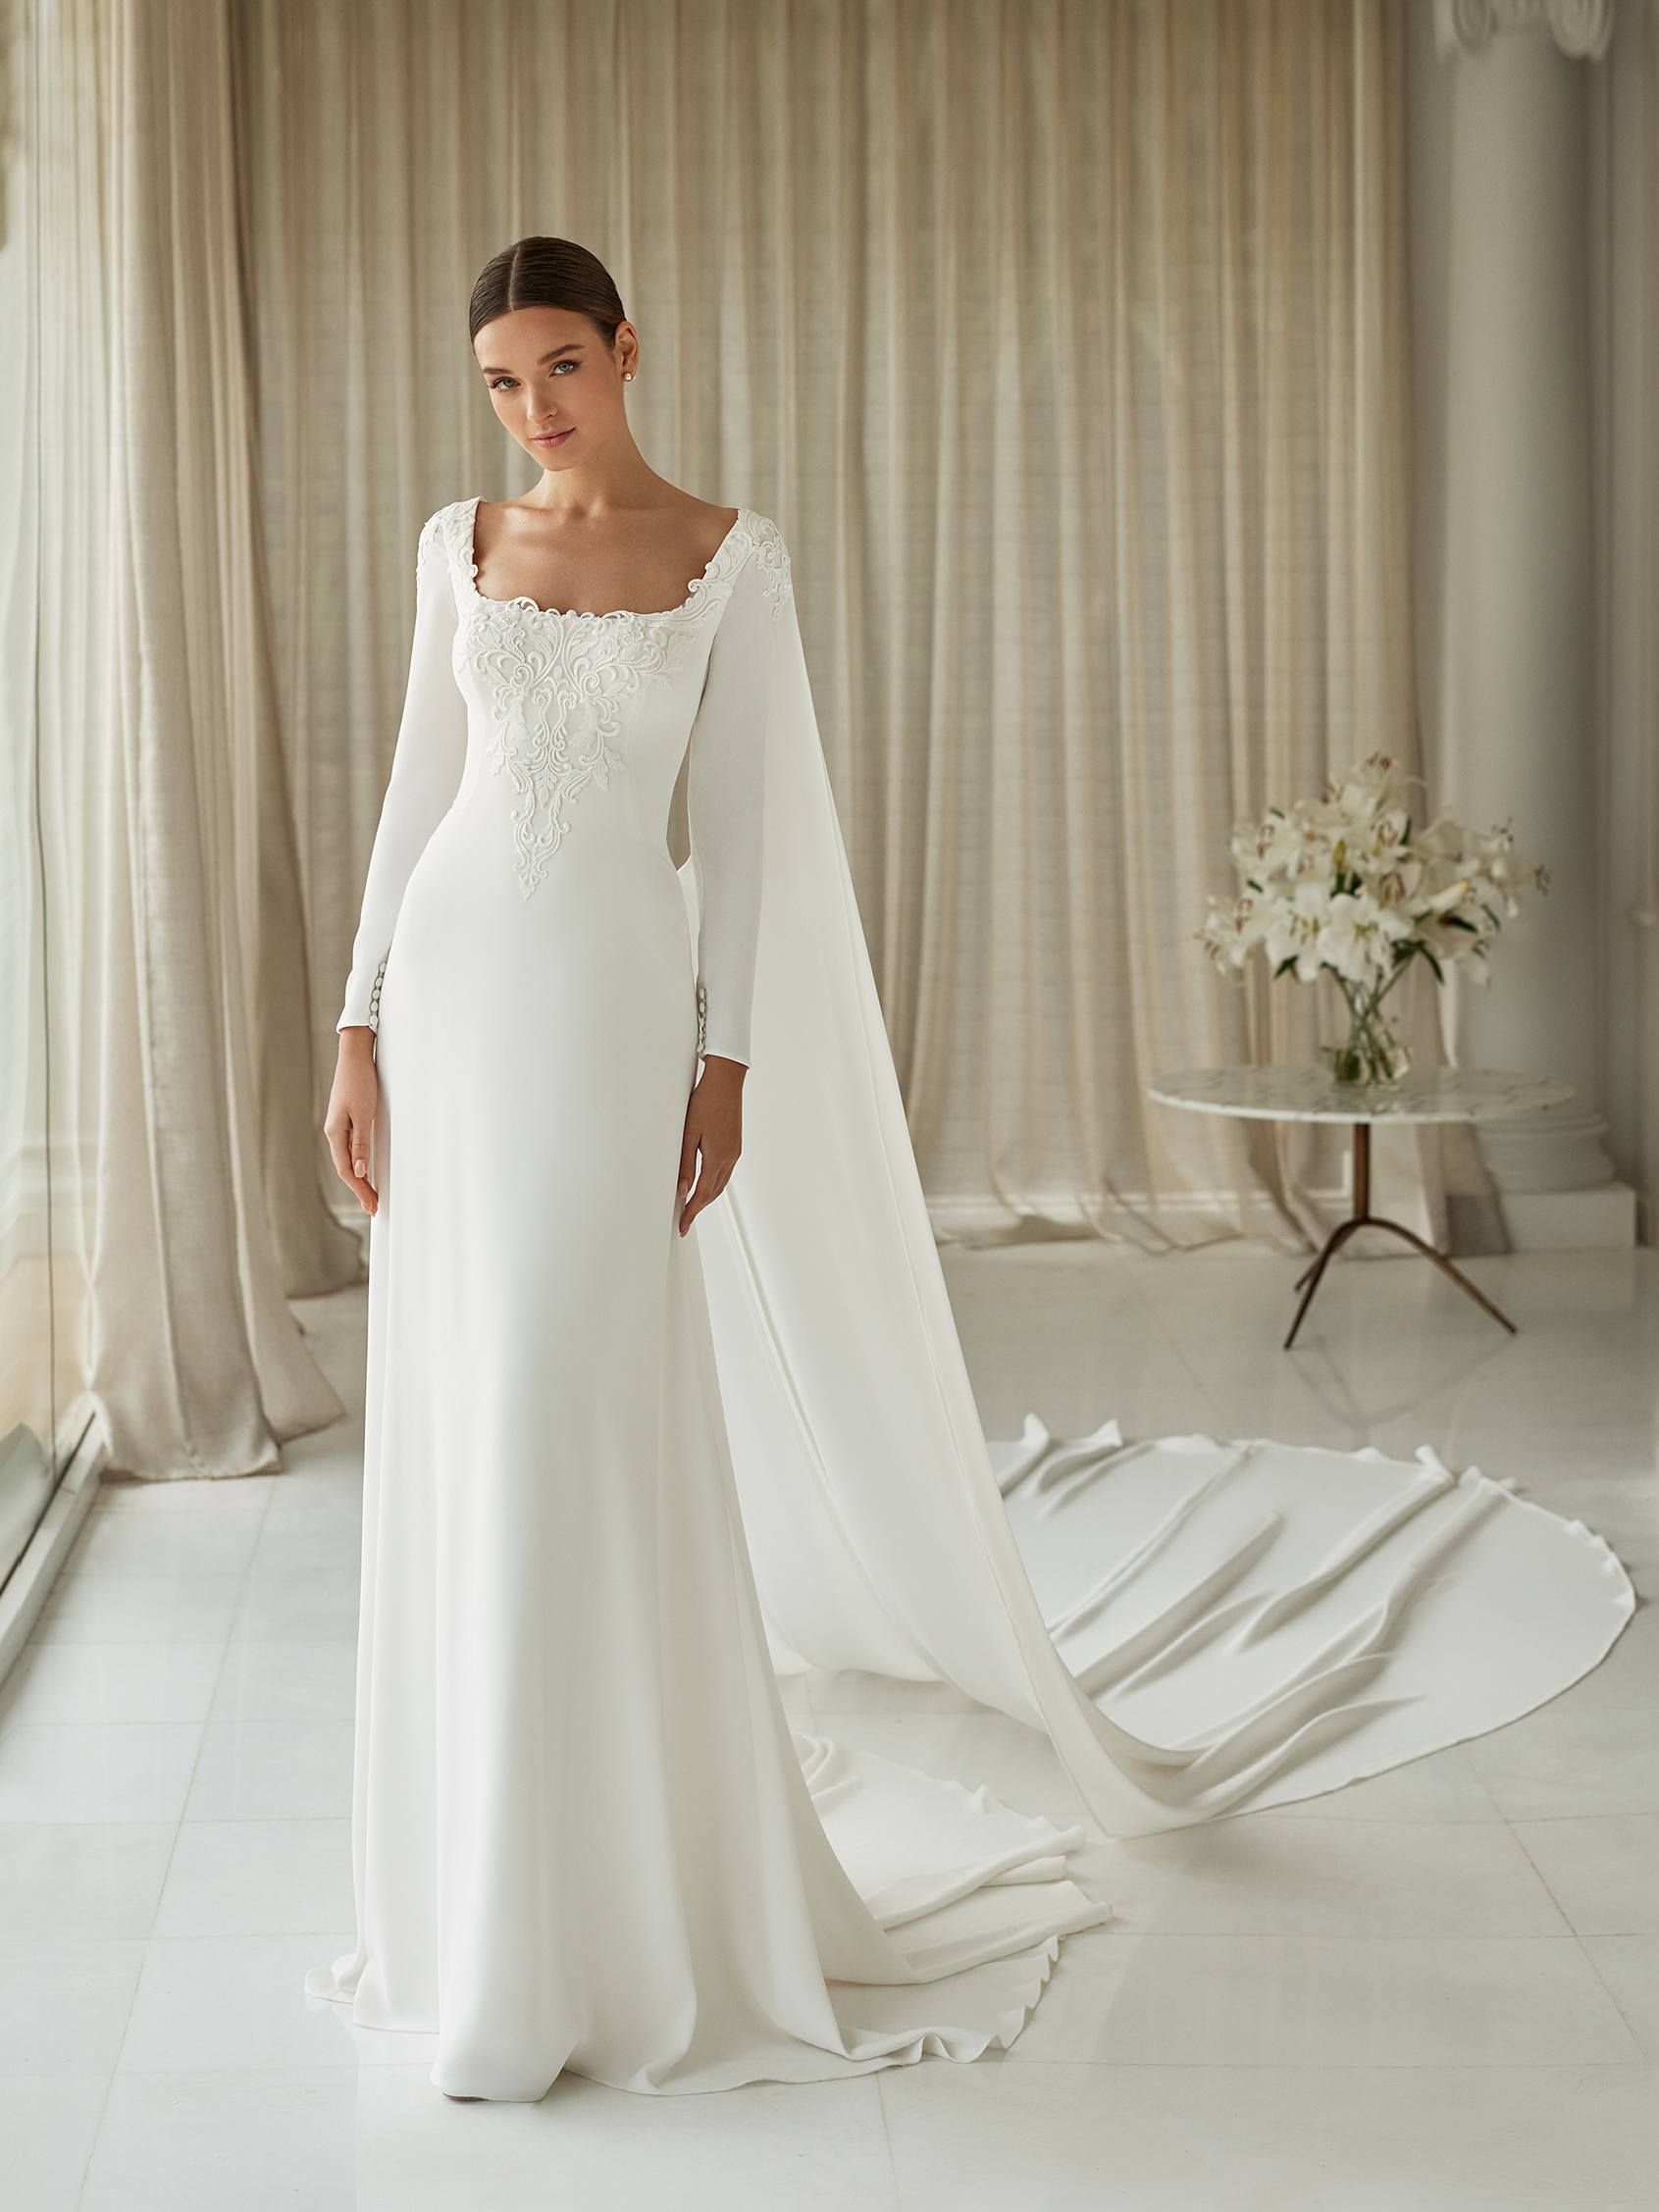 Top Winter Wedding Dresses for Every Type of Bride - Pretty Happy Love -  Wedding Blog | Essense Designs Wedding Dresses